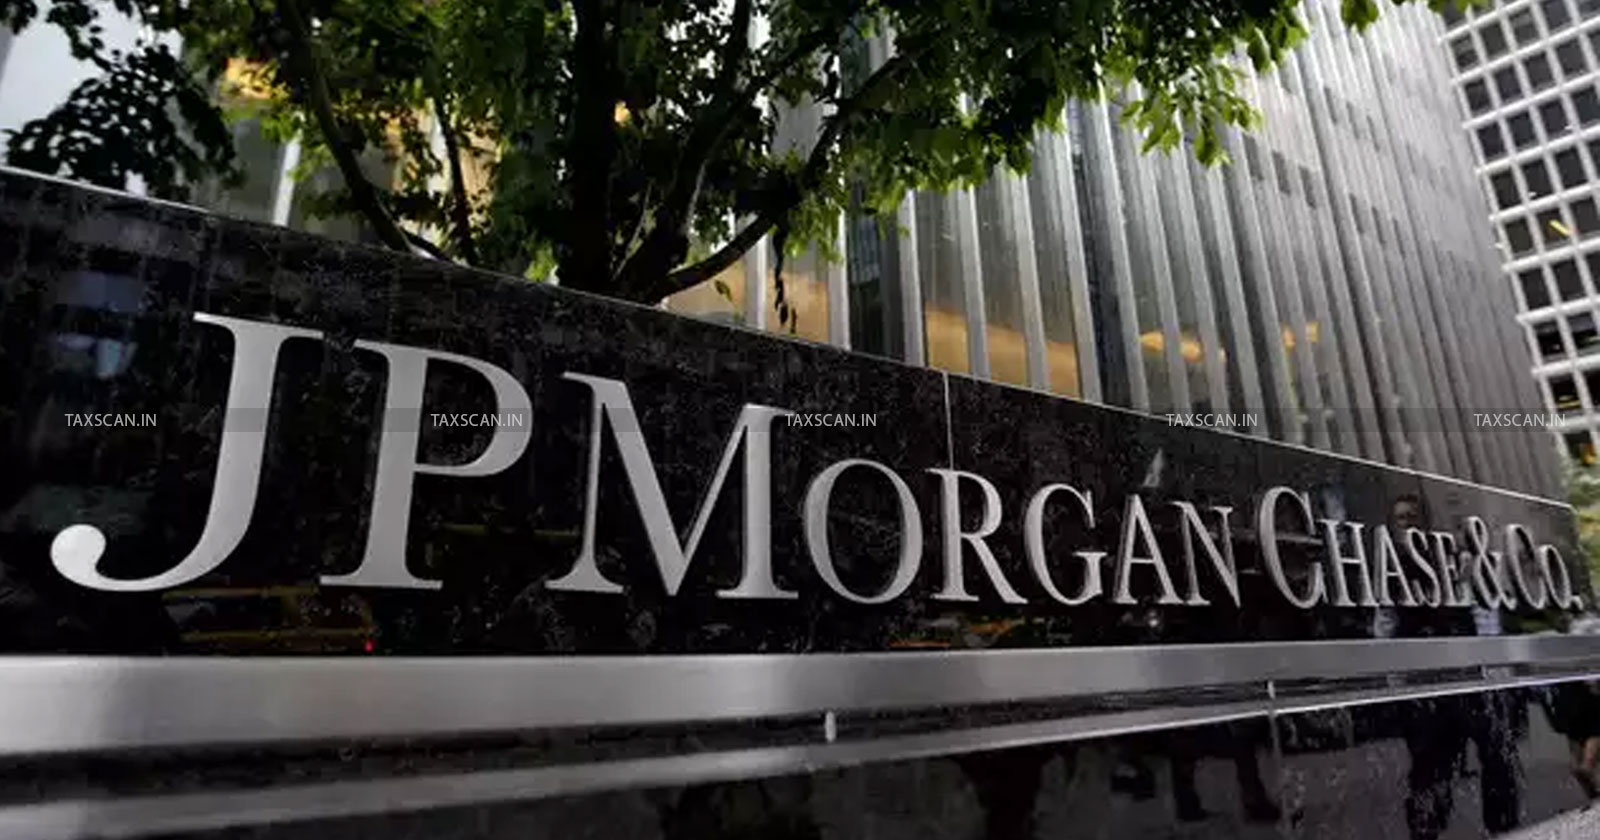 JPMorgan Chase CA vacancy - CA Vacancy in JPMorgan - Chartered Accountant jobs at JPMorgan - CA career in JPMorgan - Taxscan